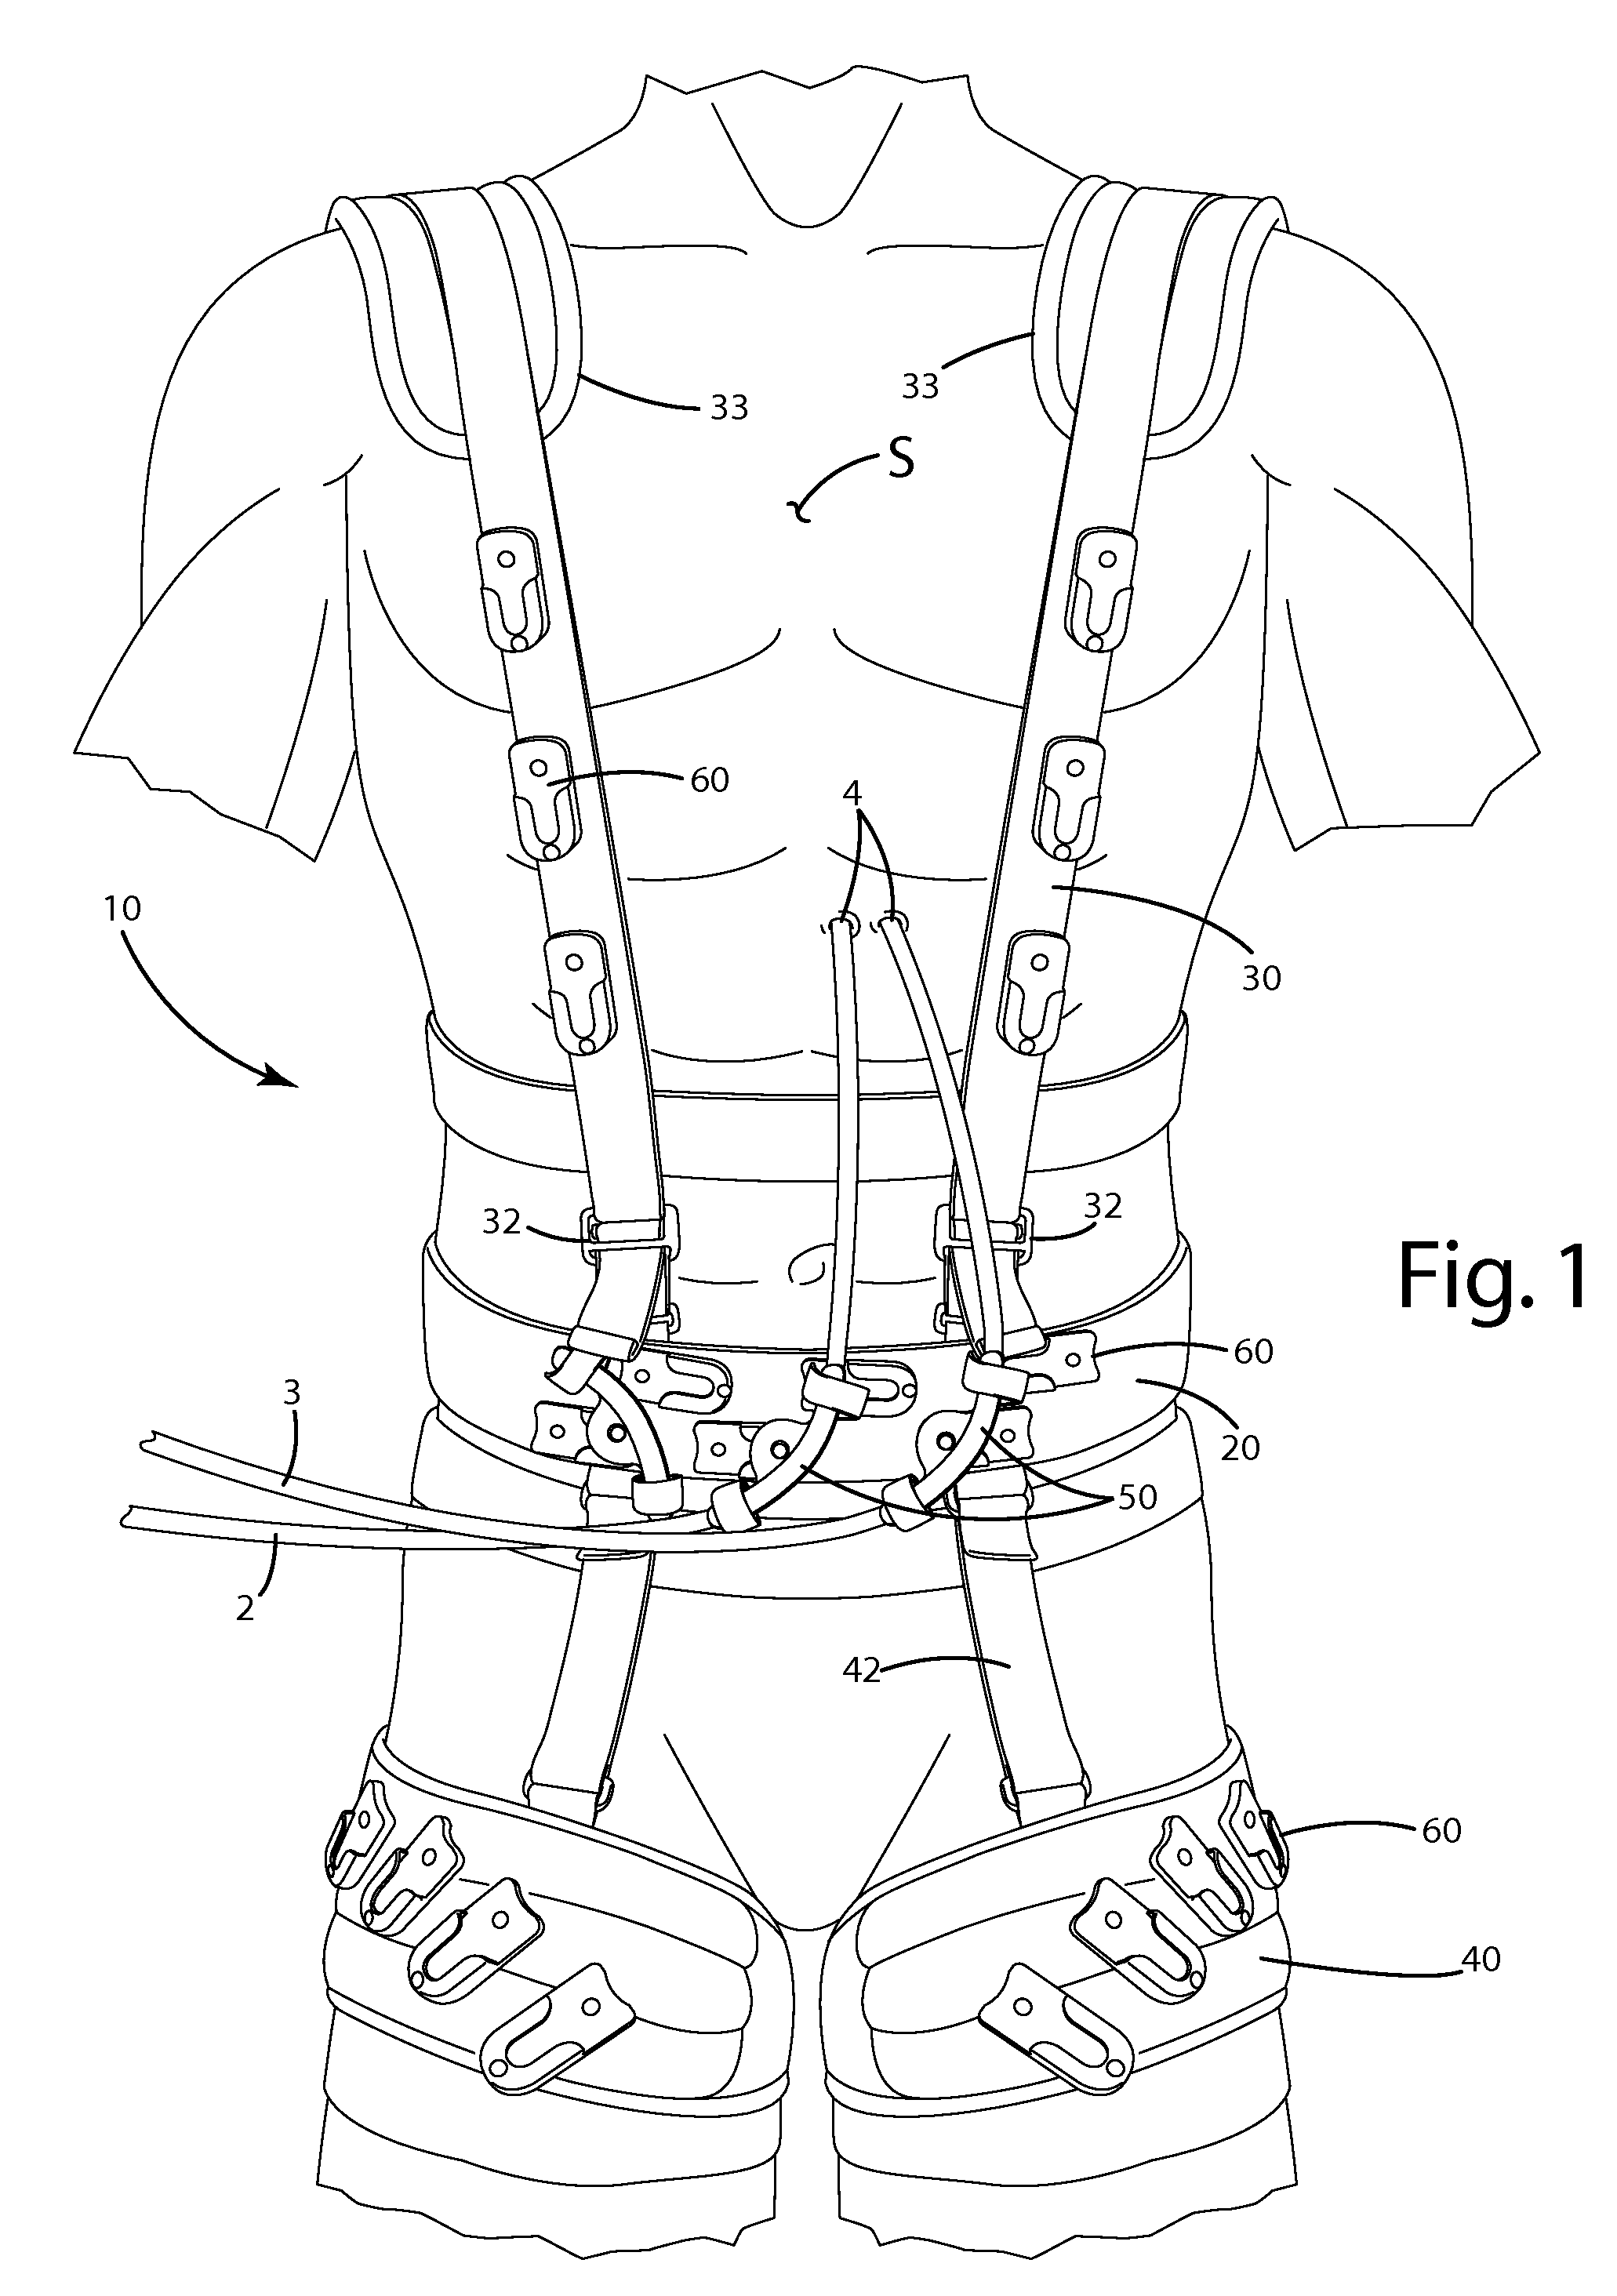 Medical tube harness